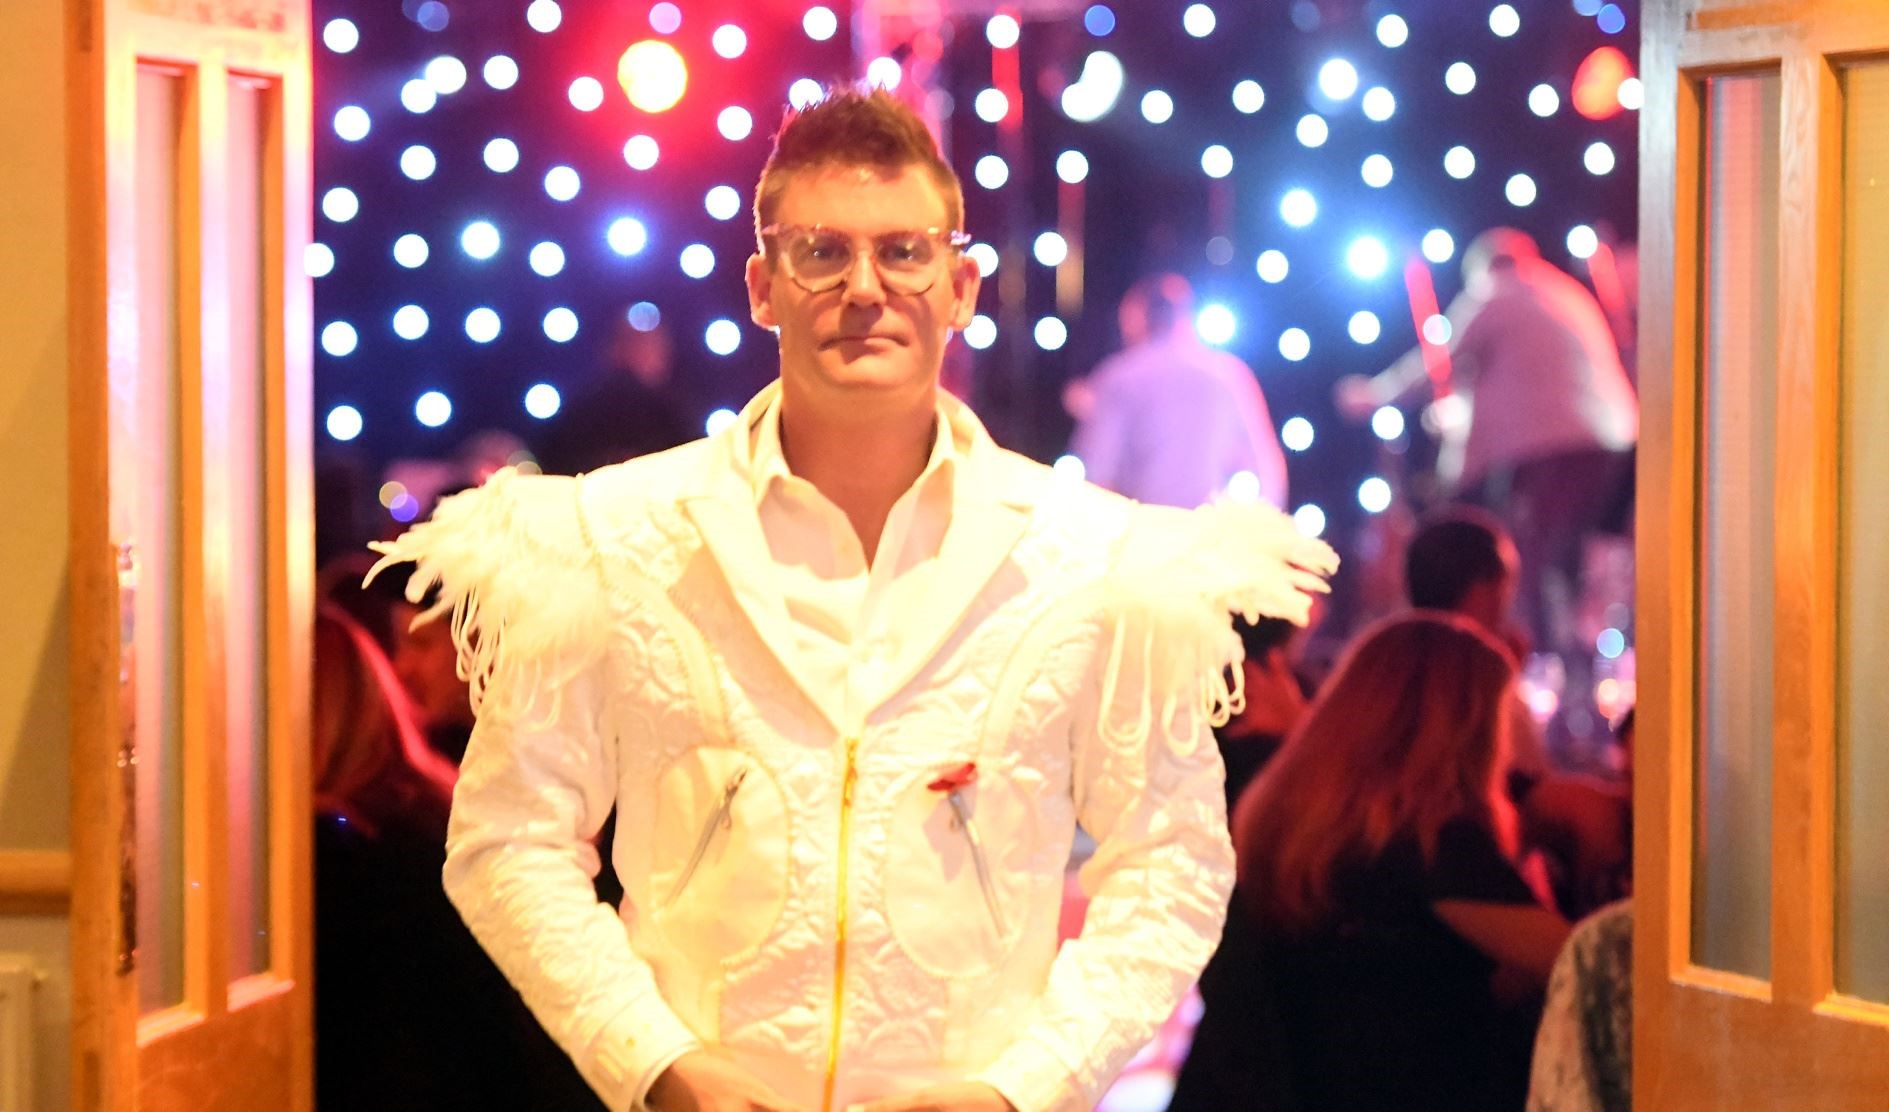 Scott Murray dressed as Elton John. Picture: James Mackenzie